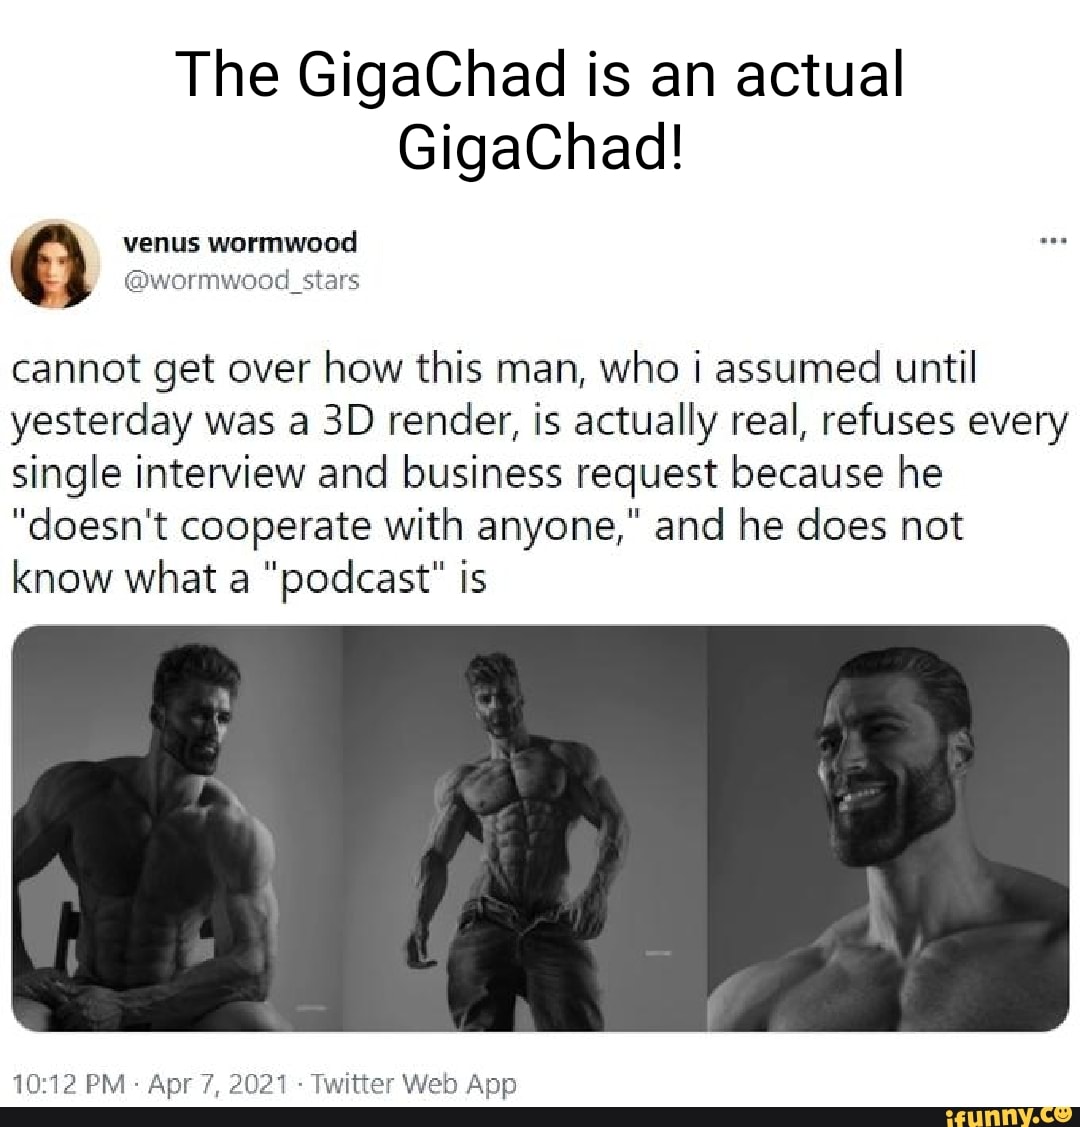 Gigachad if he real, GigaChad